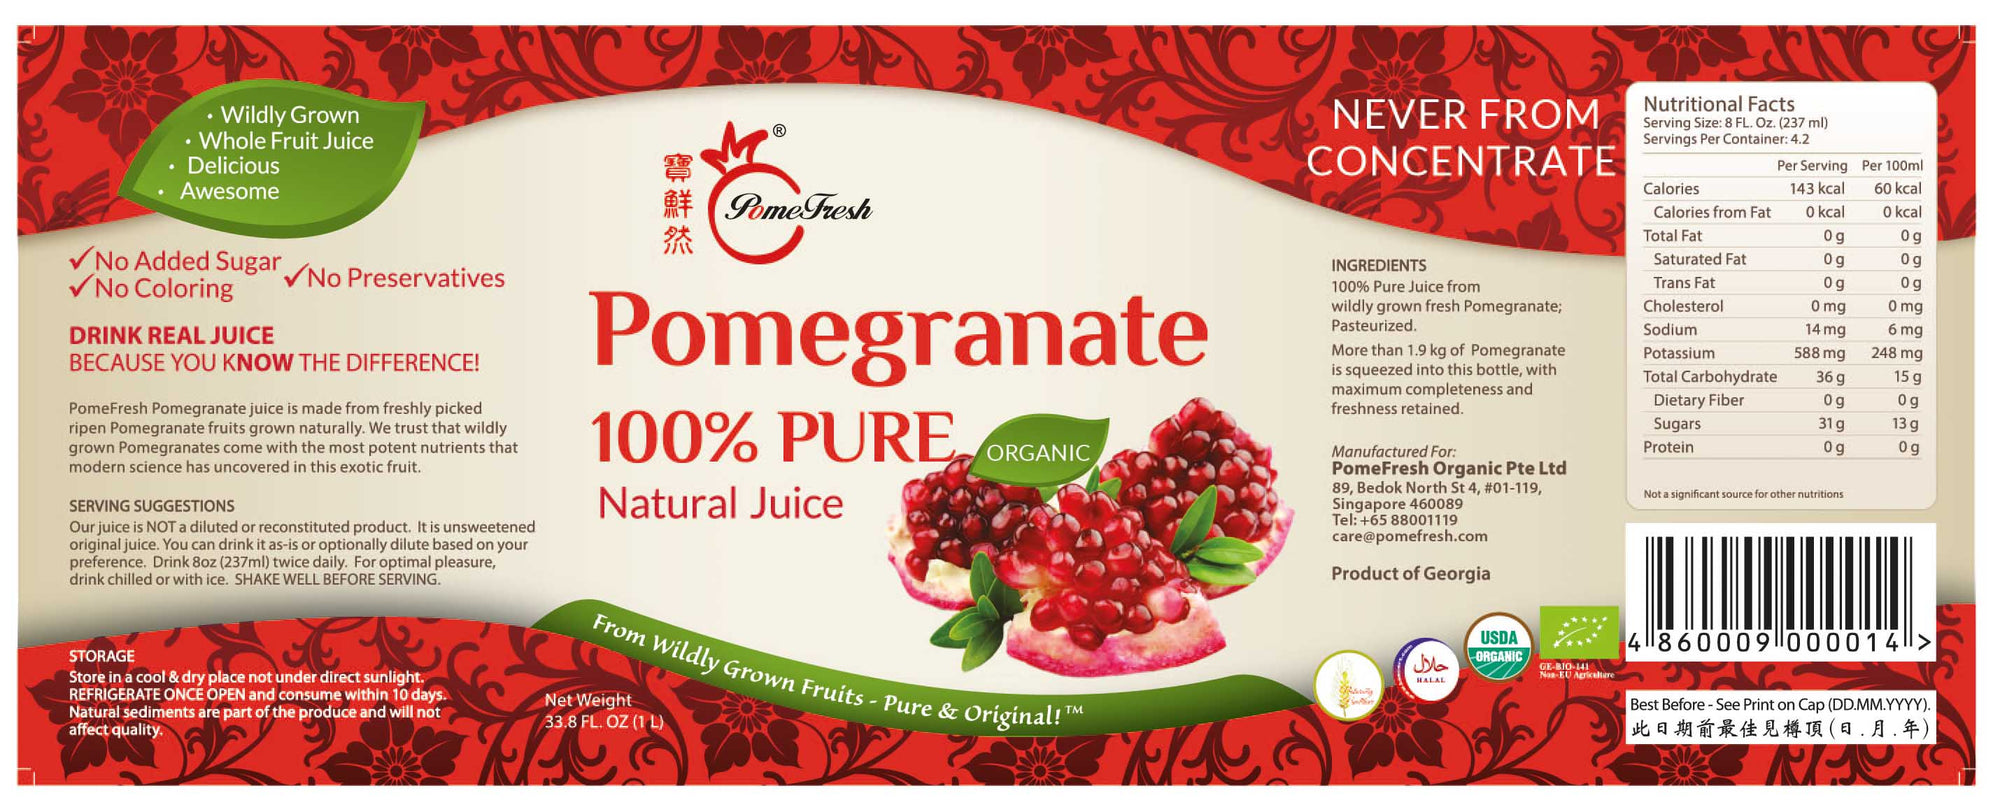 【PomeFresh】100% Pure Organic Pomegranate Juice 1000mLX2 (2 Bottles) - PomeFresh Organic Pte Ltd